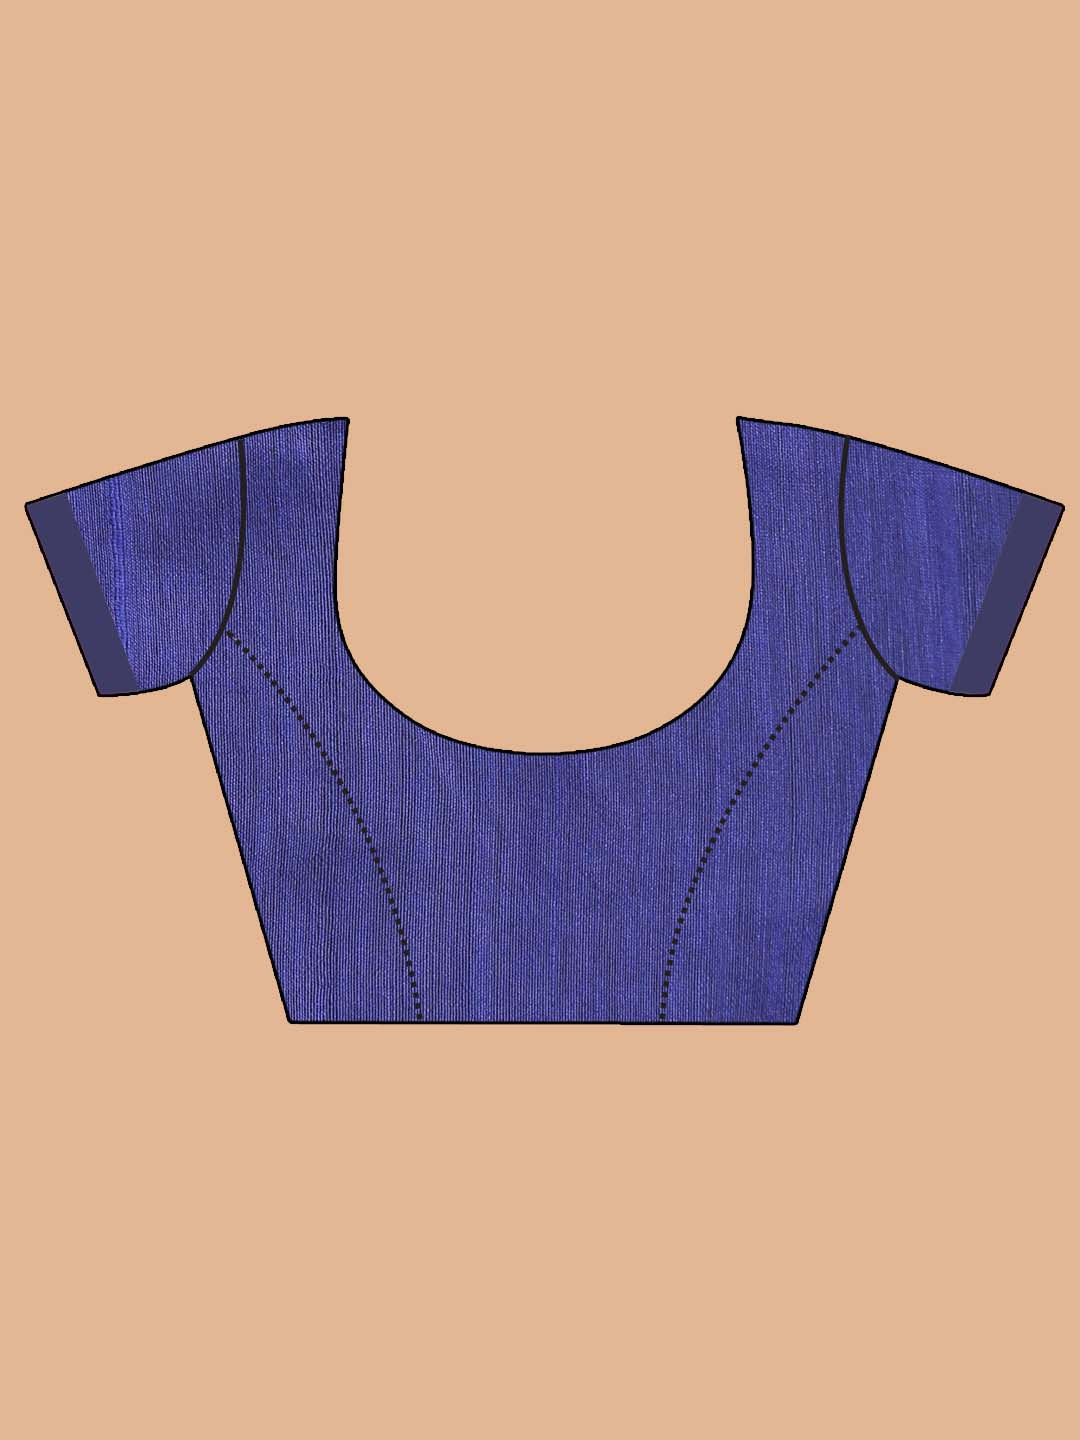 Indethnic Blue Bengal Handloom Cotton Blend Work Saree - Blouse Piece View